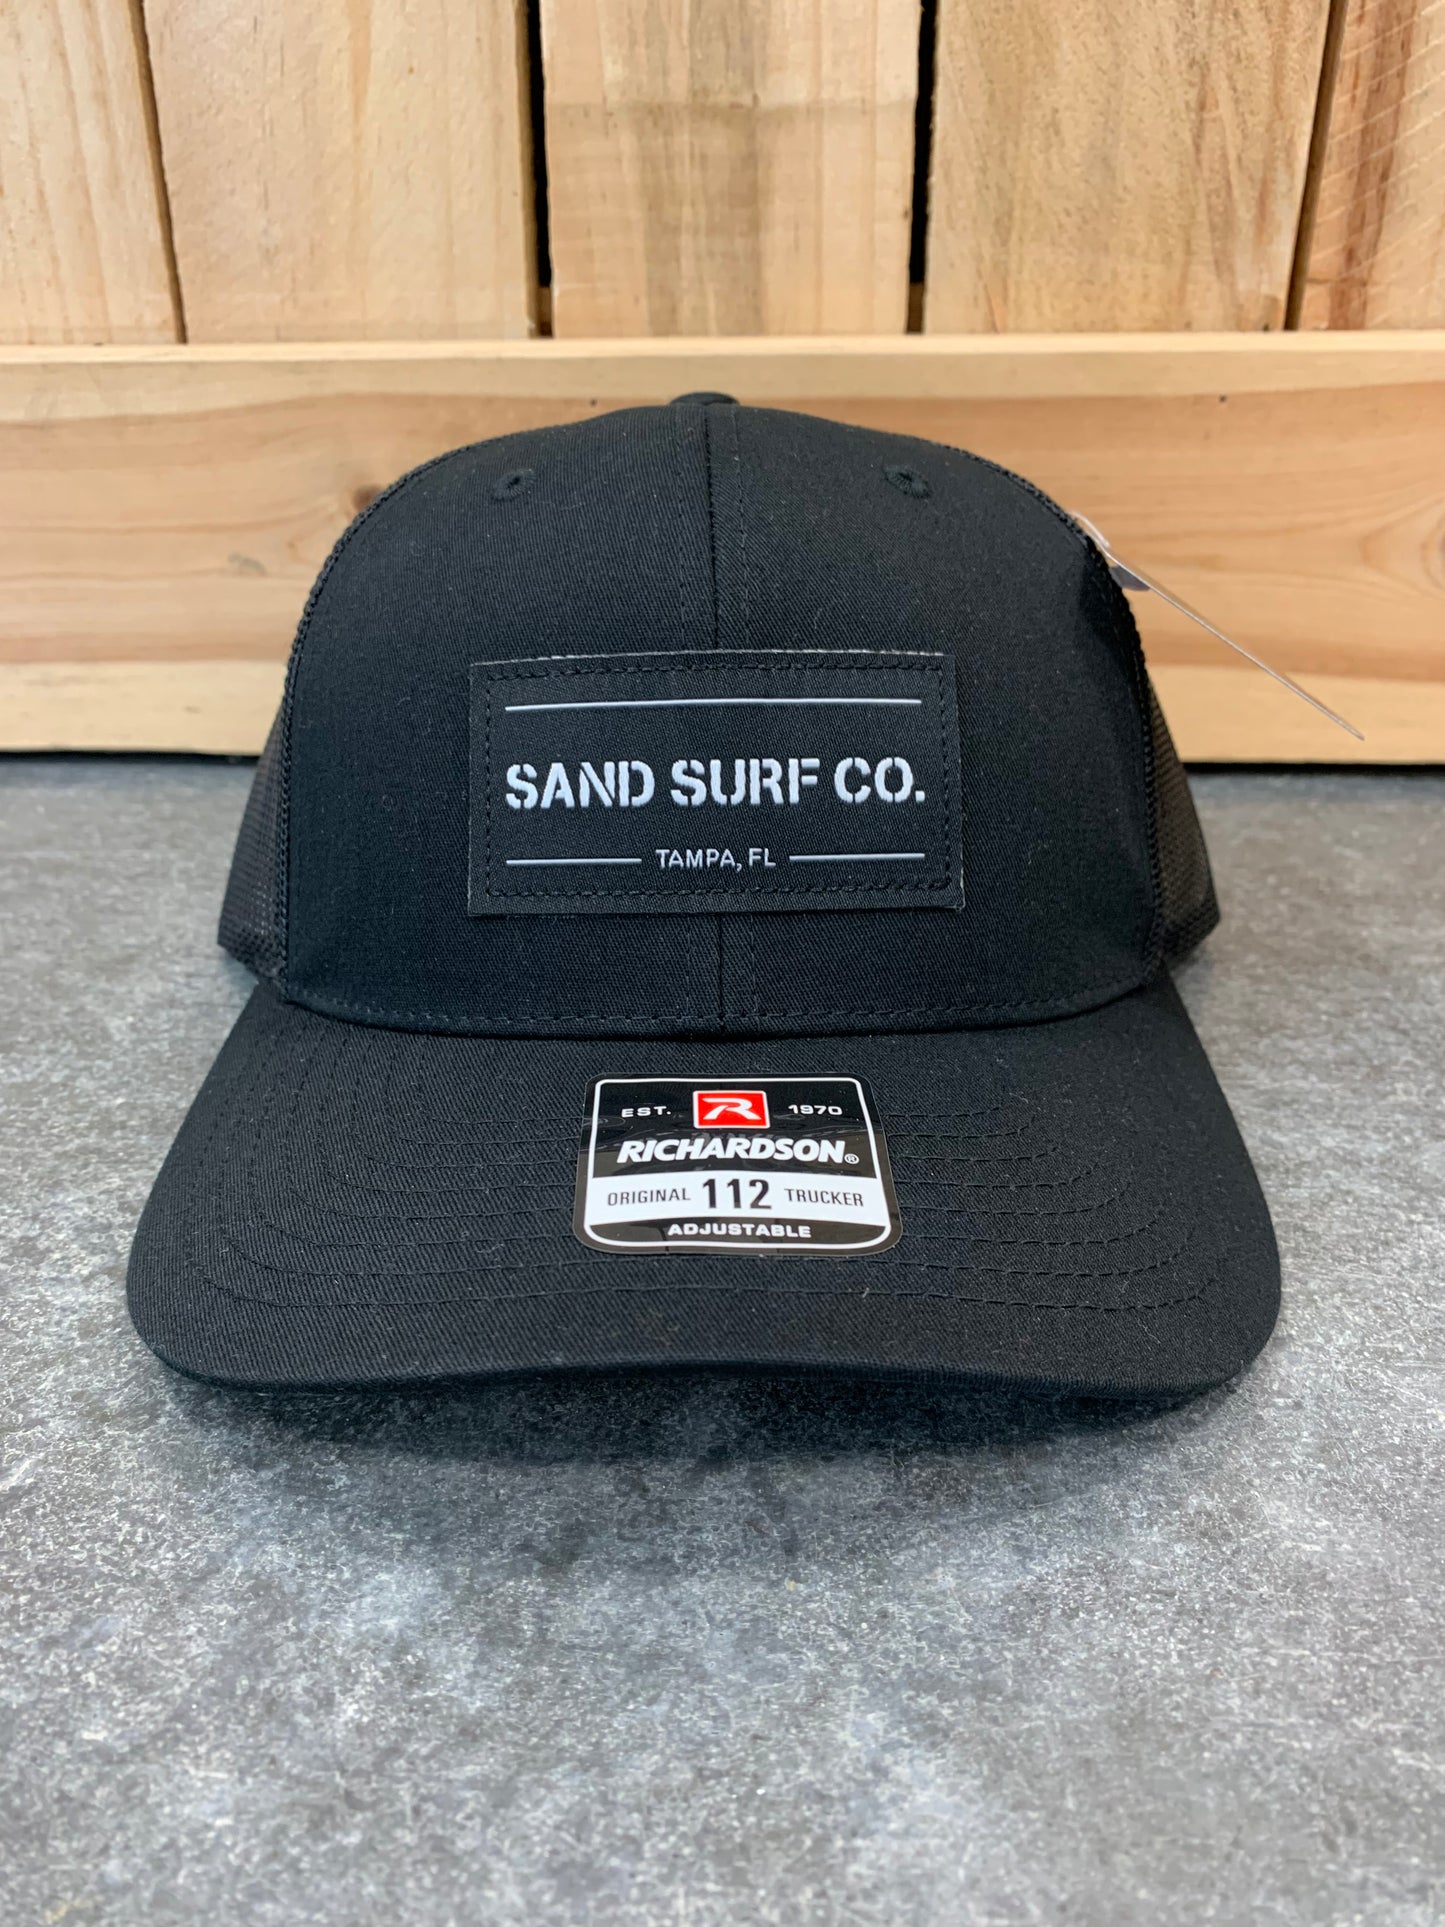 Sand Surf Co. Richardson Patch Trucker Hat